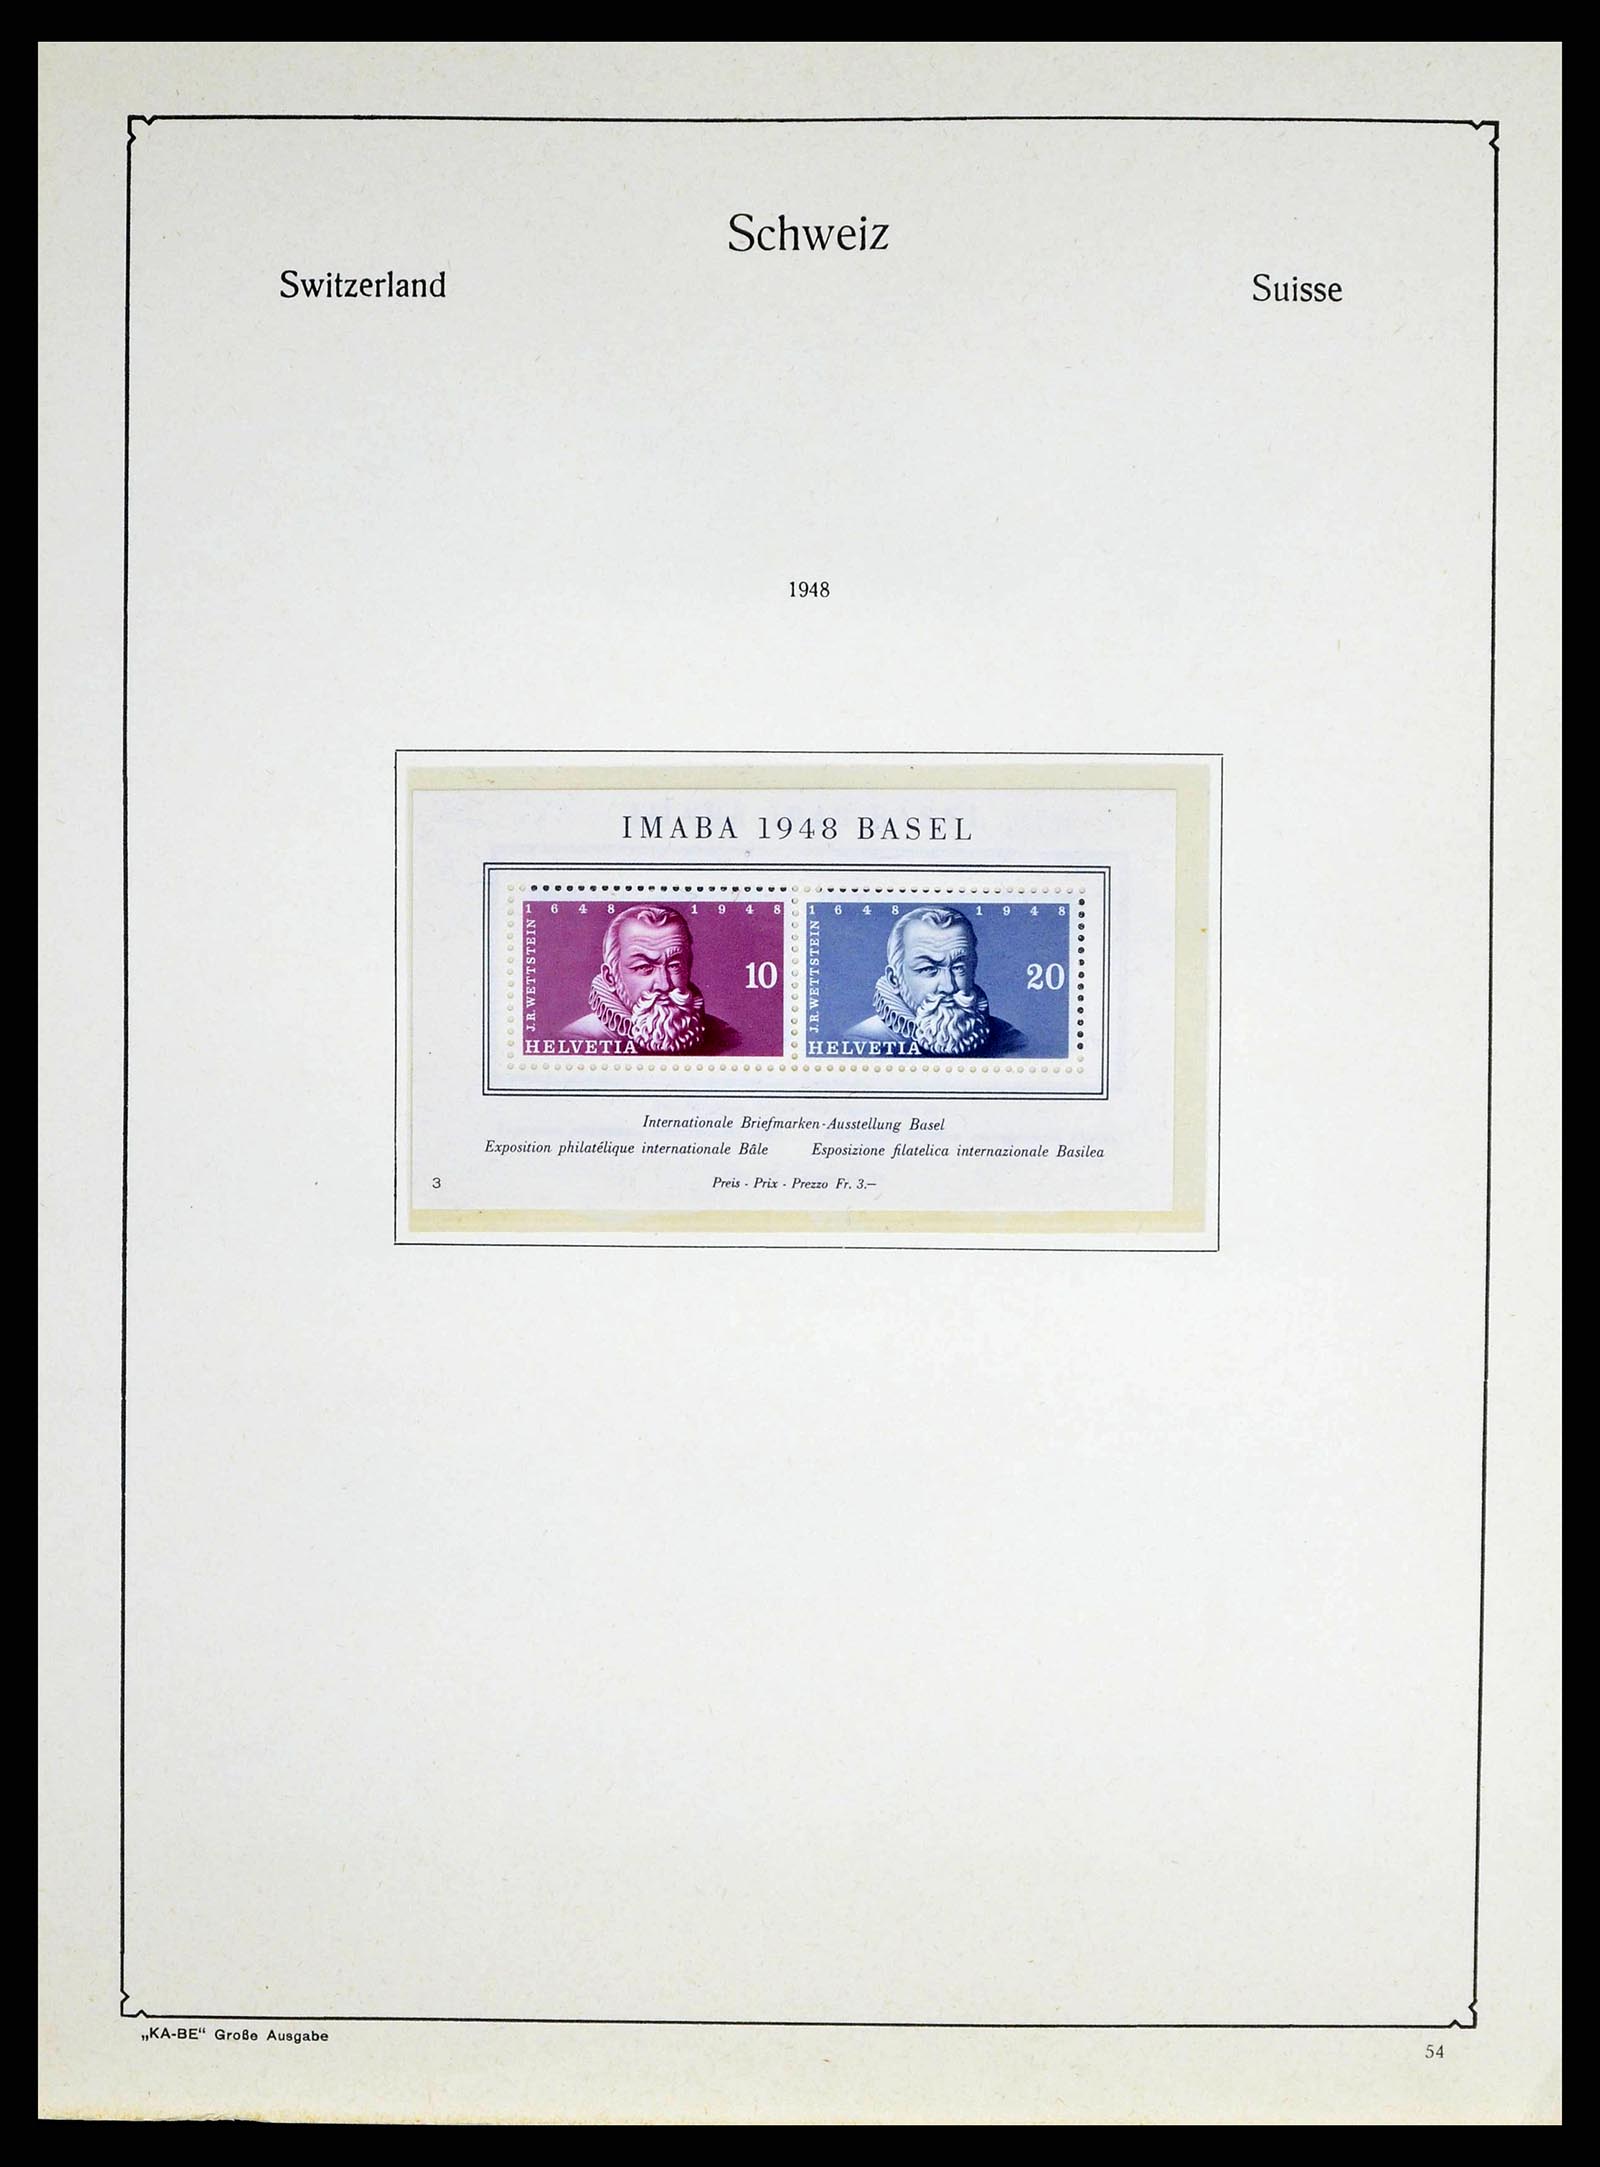 38706 0049 - Stamp collection 38706 Switzerland 1854-1985.